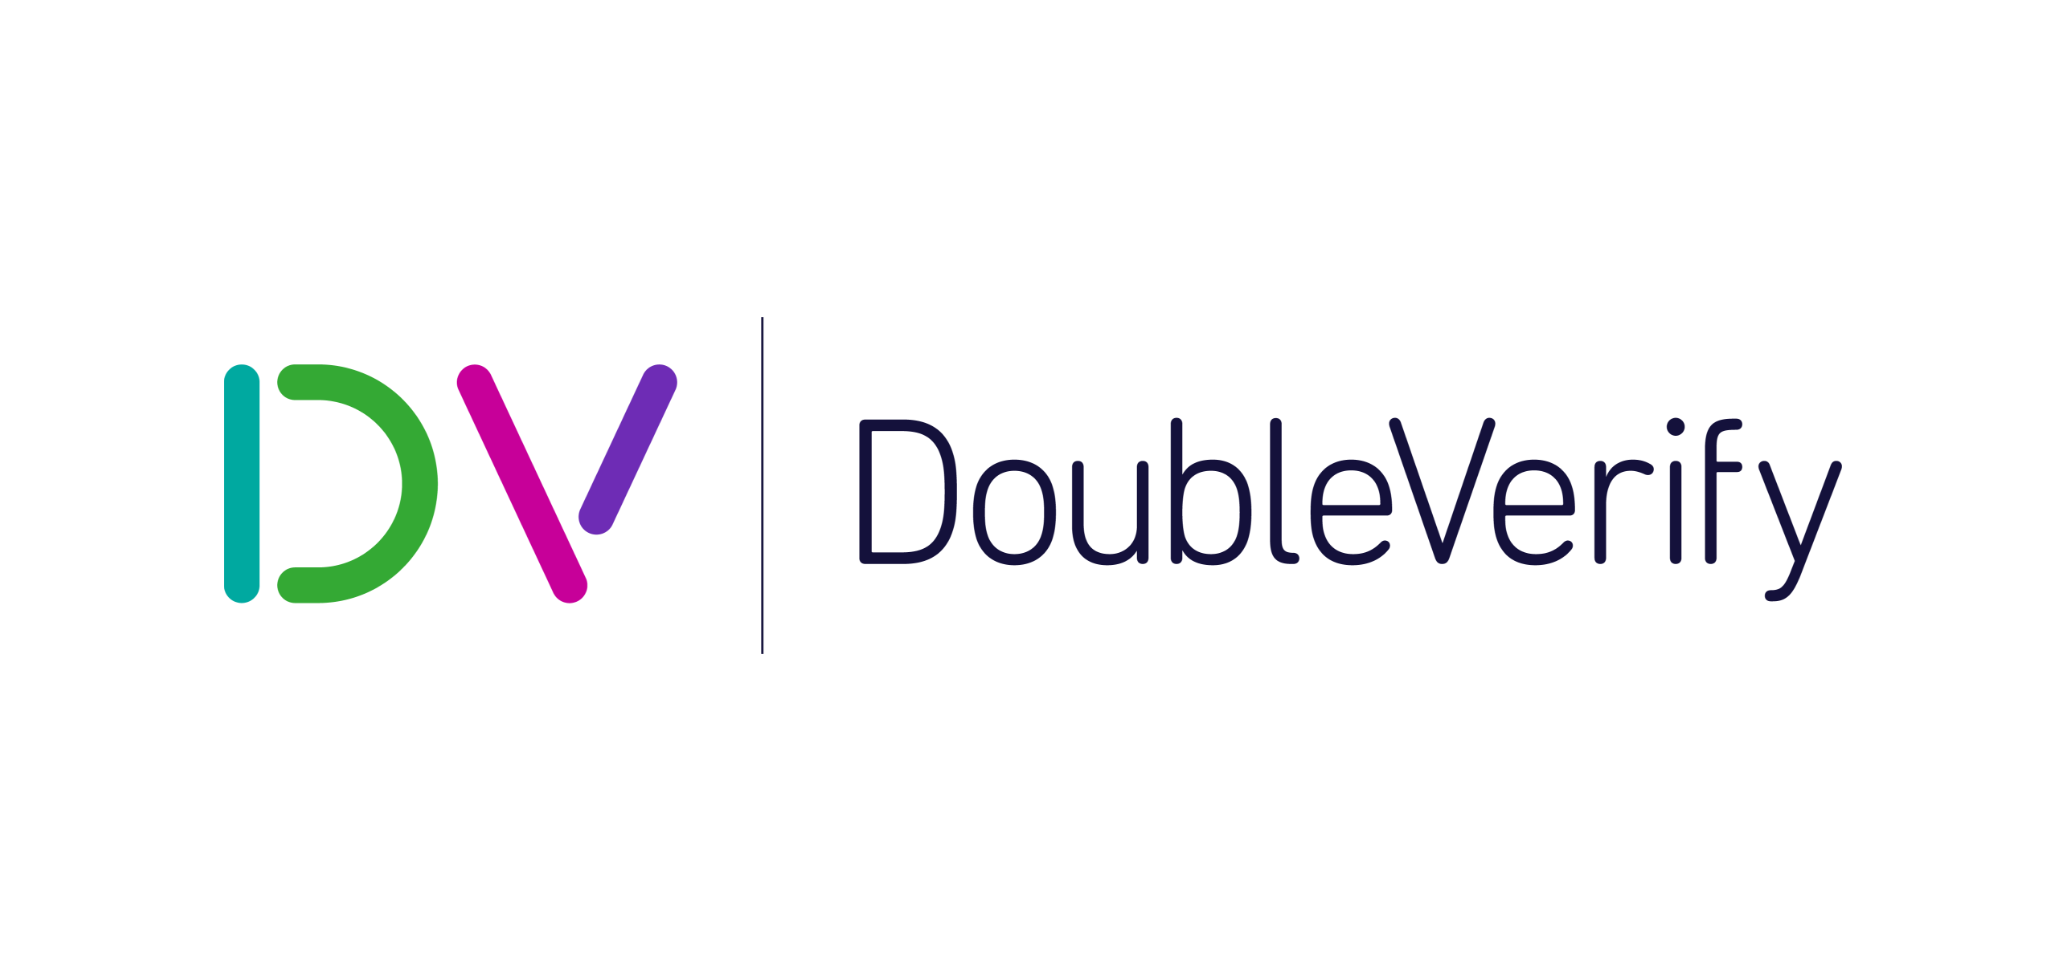 DoubleVerify Japan株式会社